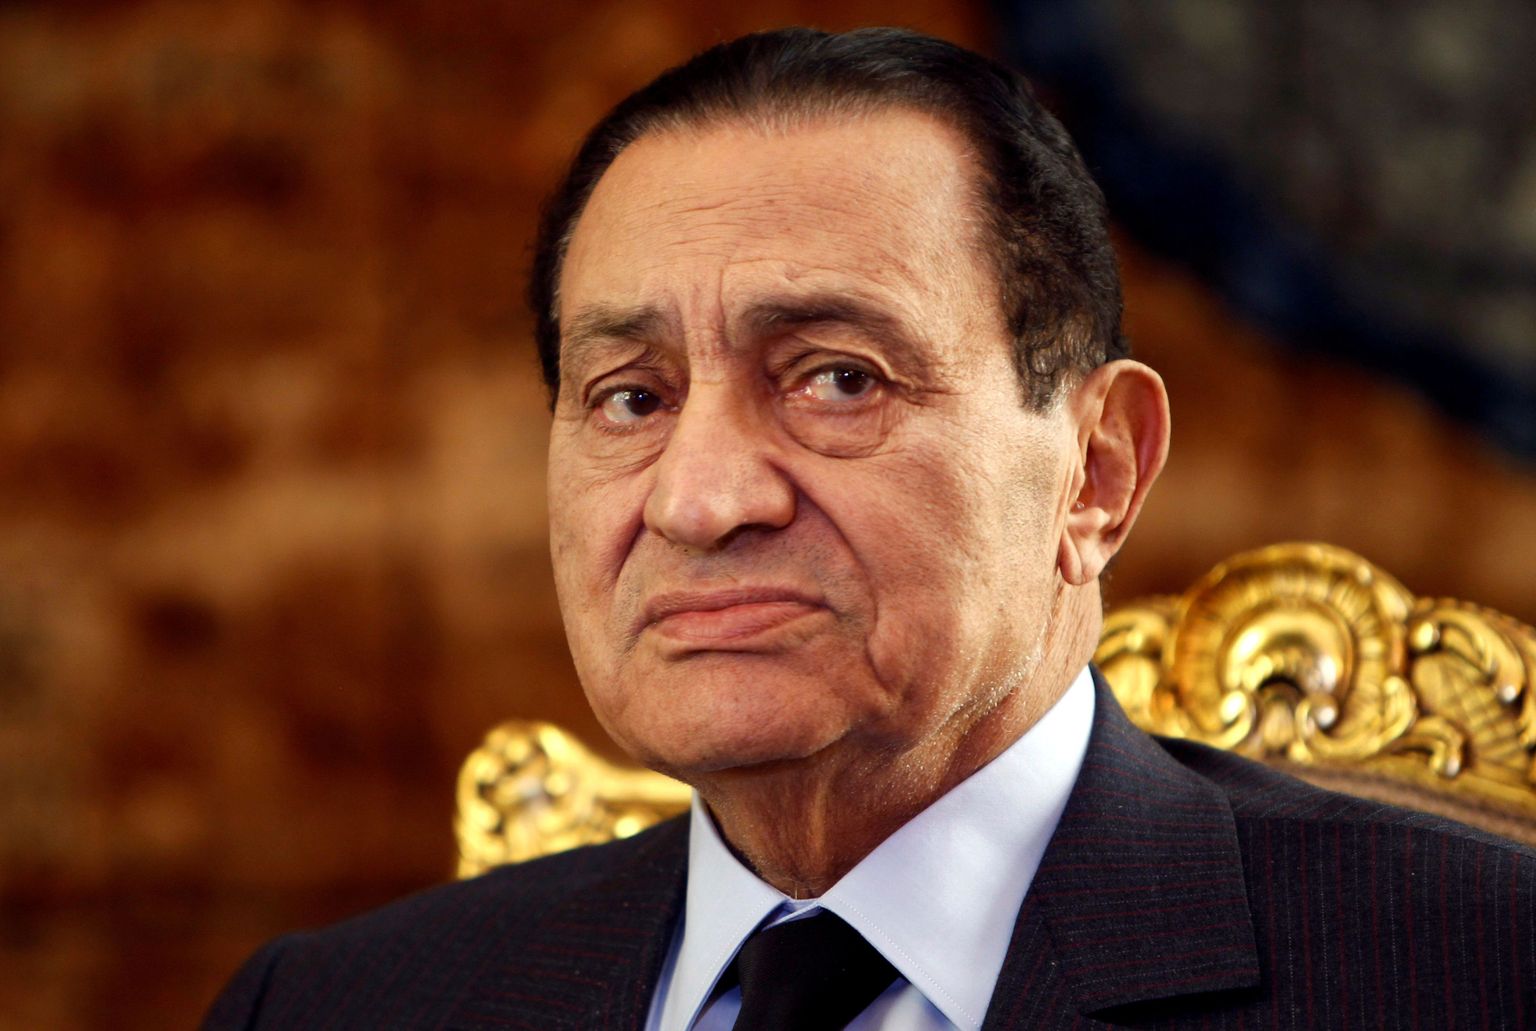 Egiptuse endine president Hosni Mubarak